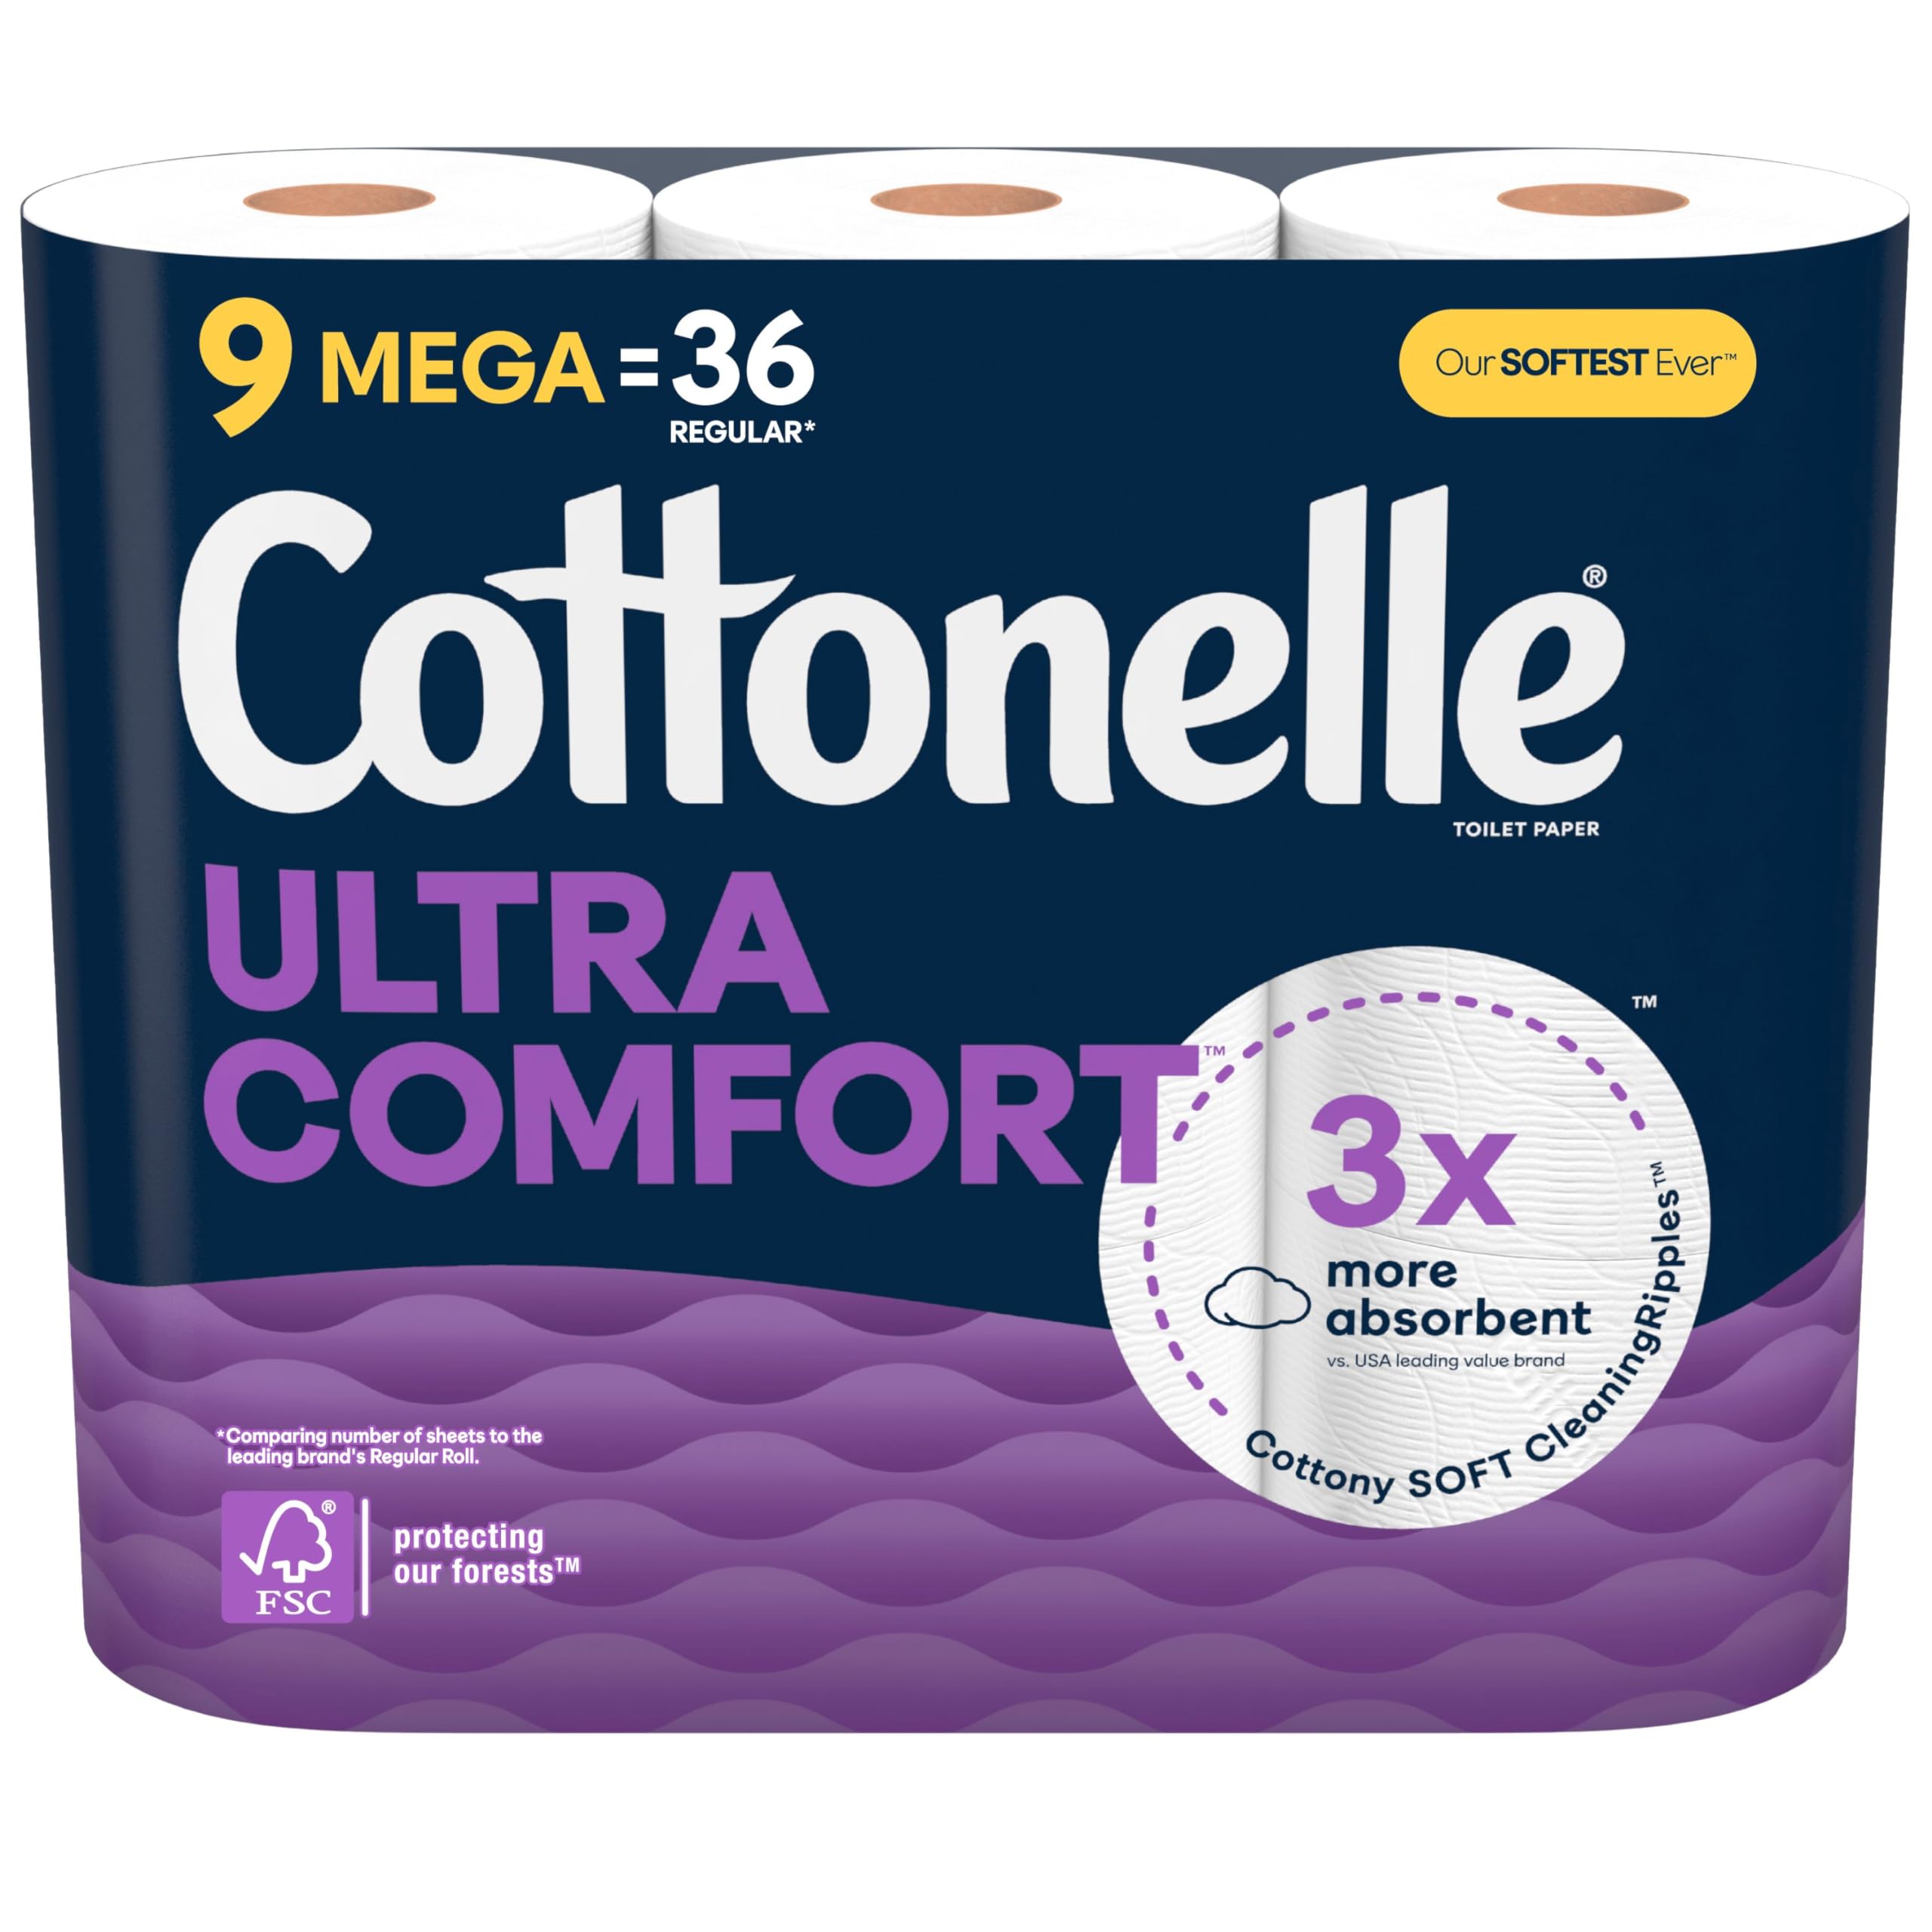 Cottonelle Ultra Comfort Toilet Paper, 9 Mega Rolls (9 Mega Rolls = 36 Regular Rolls), 244 Sheets per Roll, Packaging May Vary